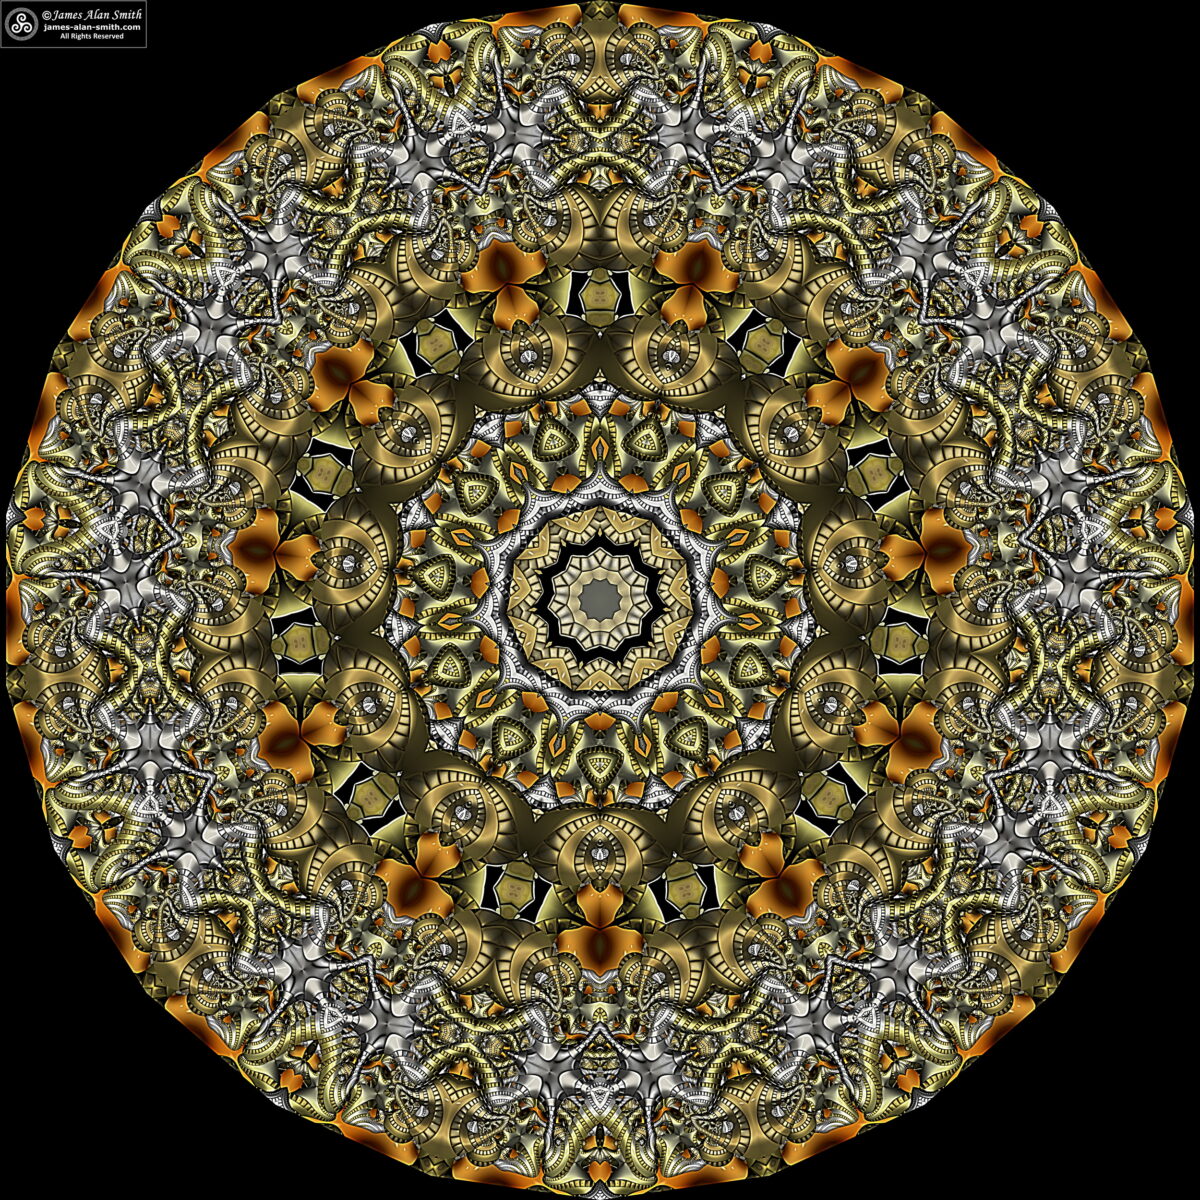 Linked Metal Mandala: Artwork by James Alan Smith